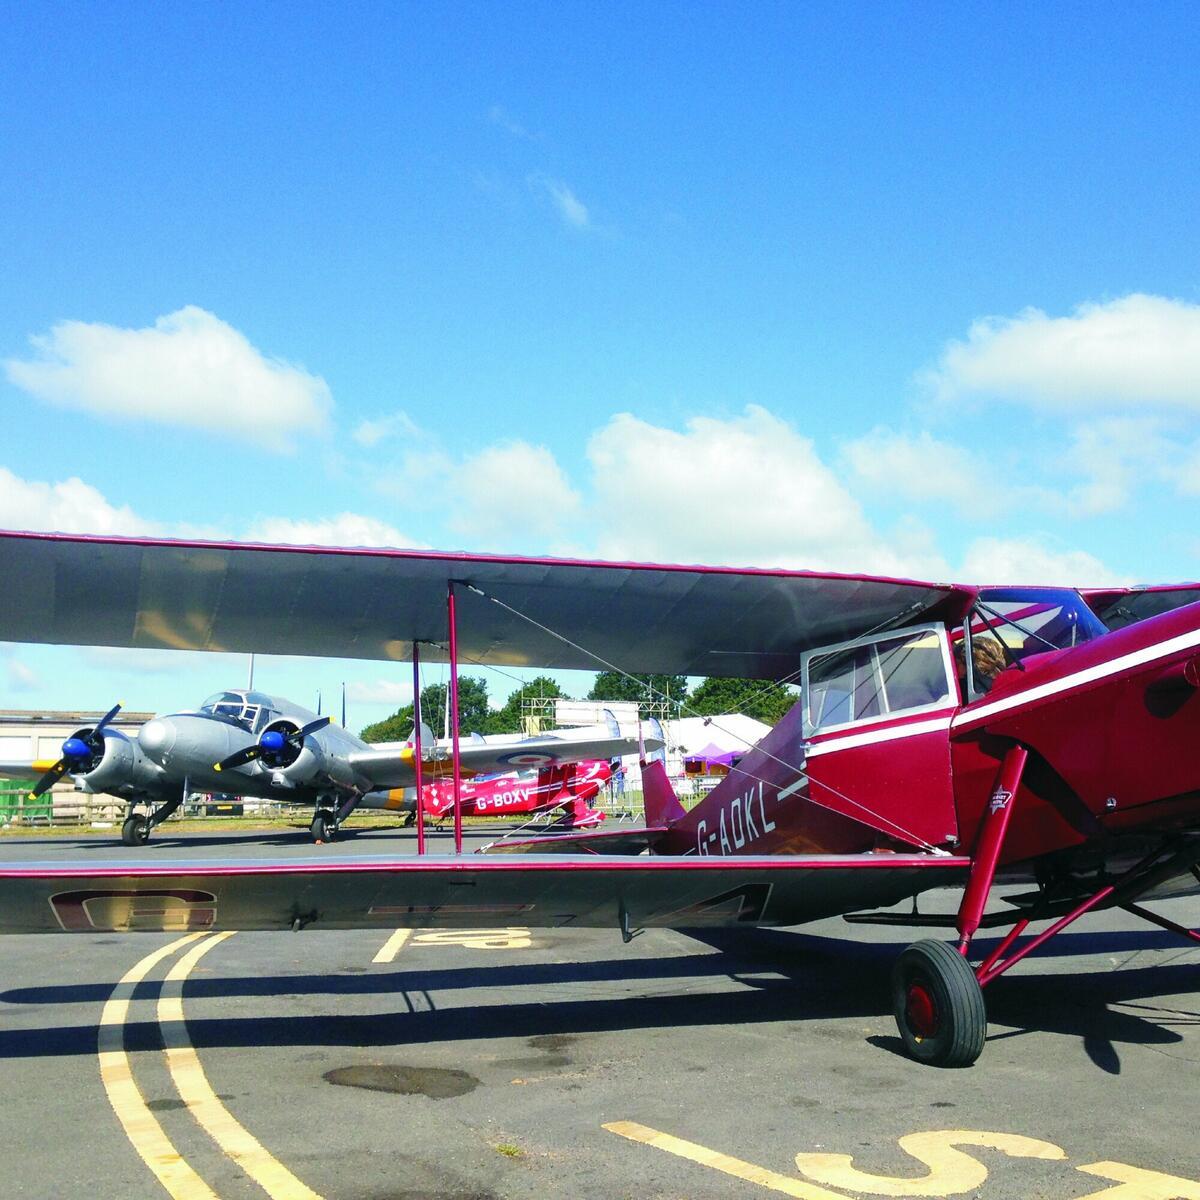 Aircraft visiting the Shobdon Food & Flying Festival